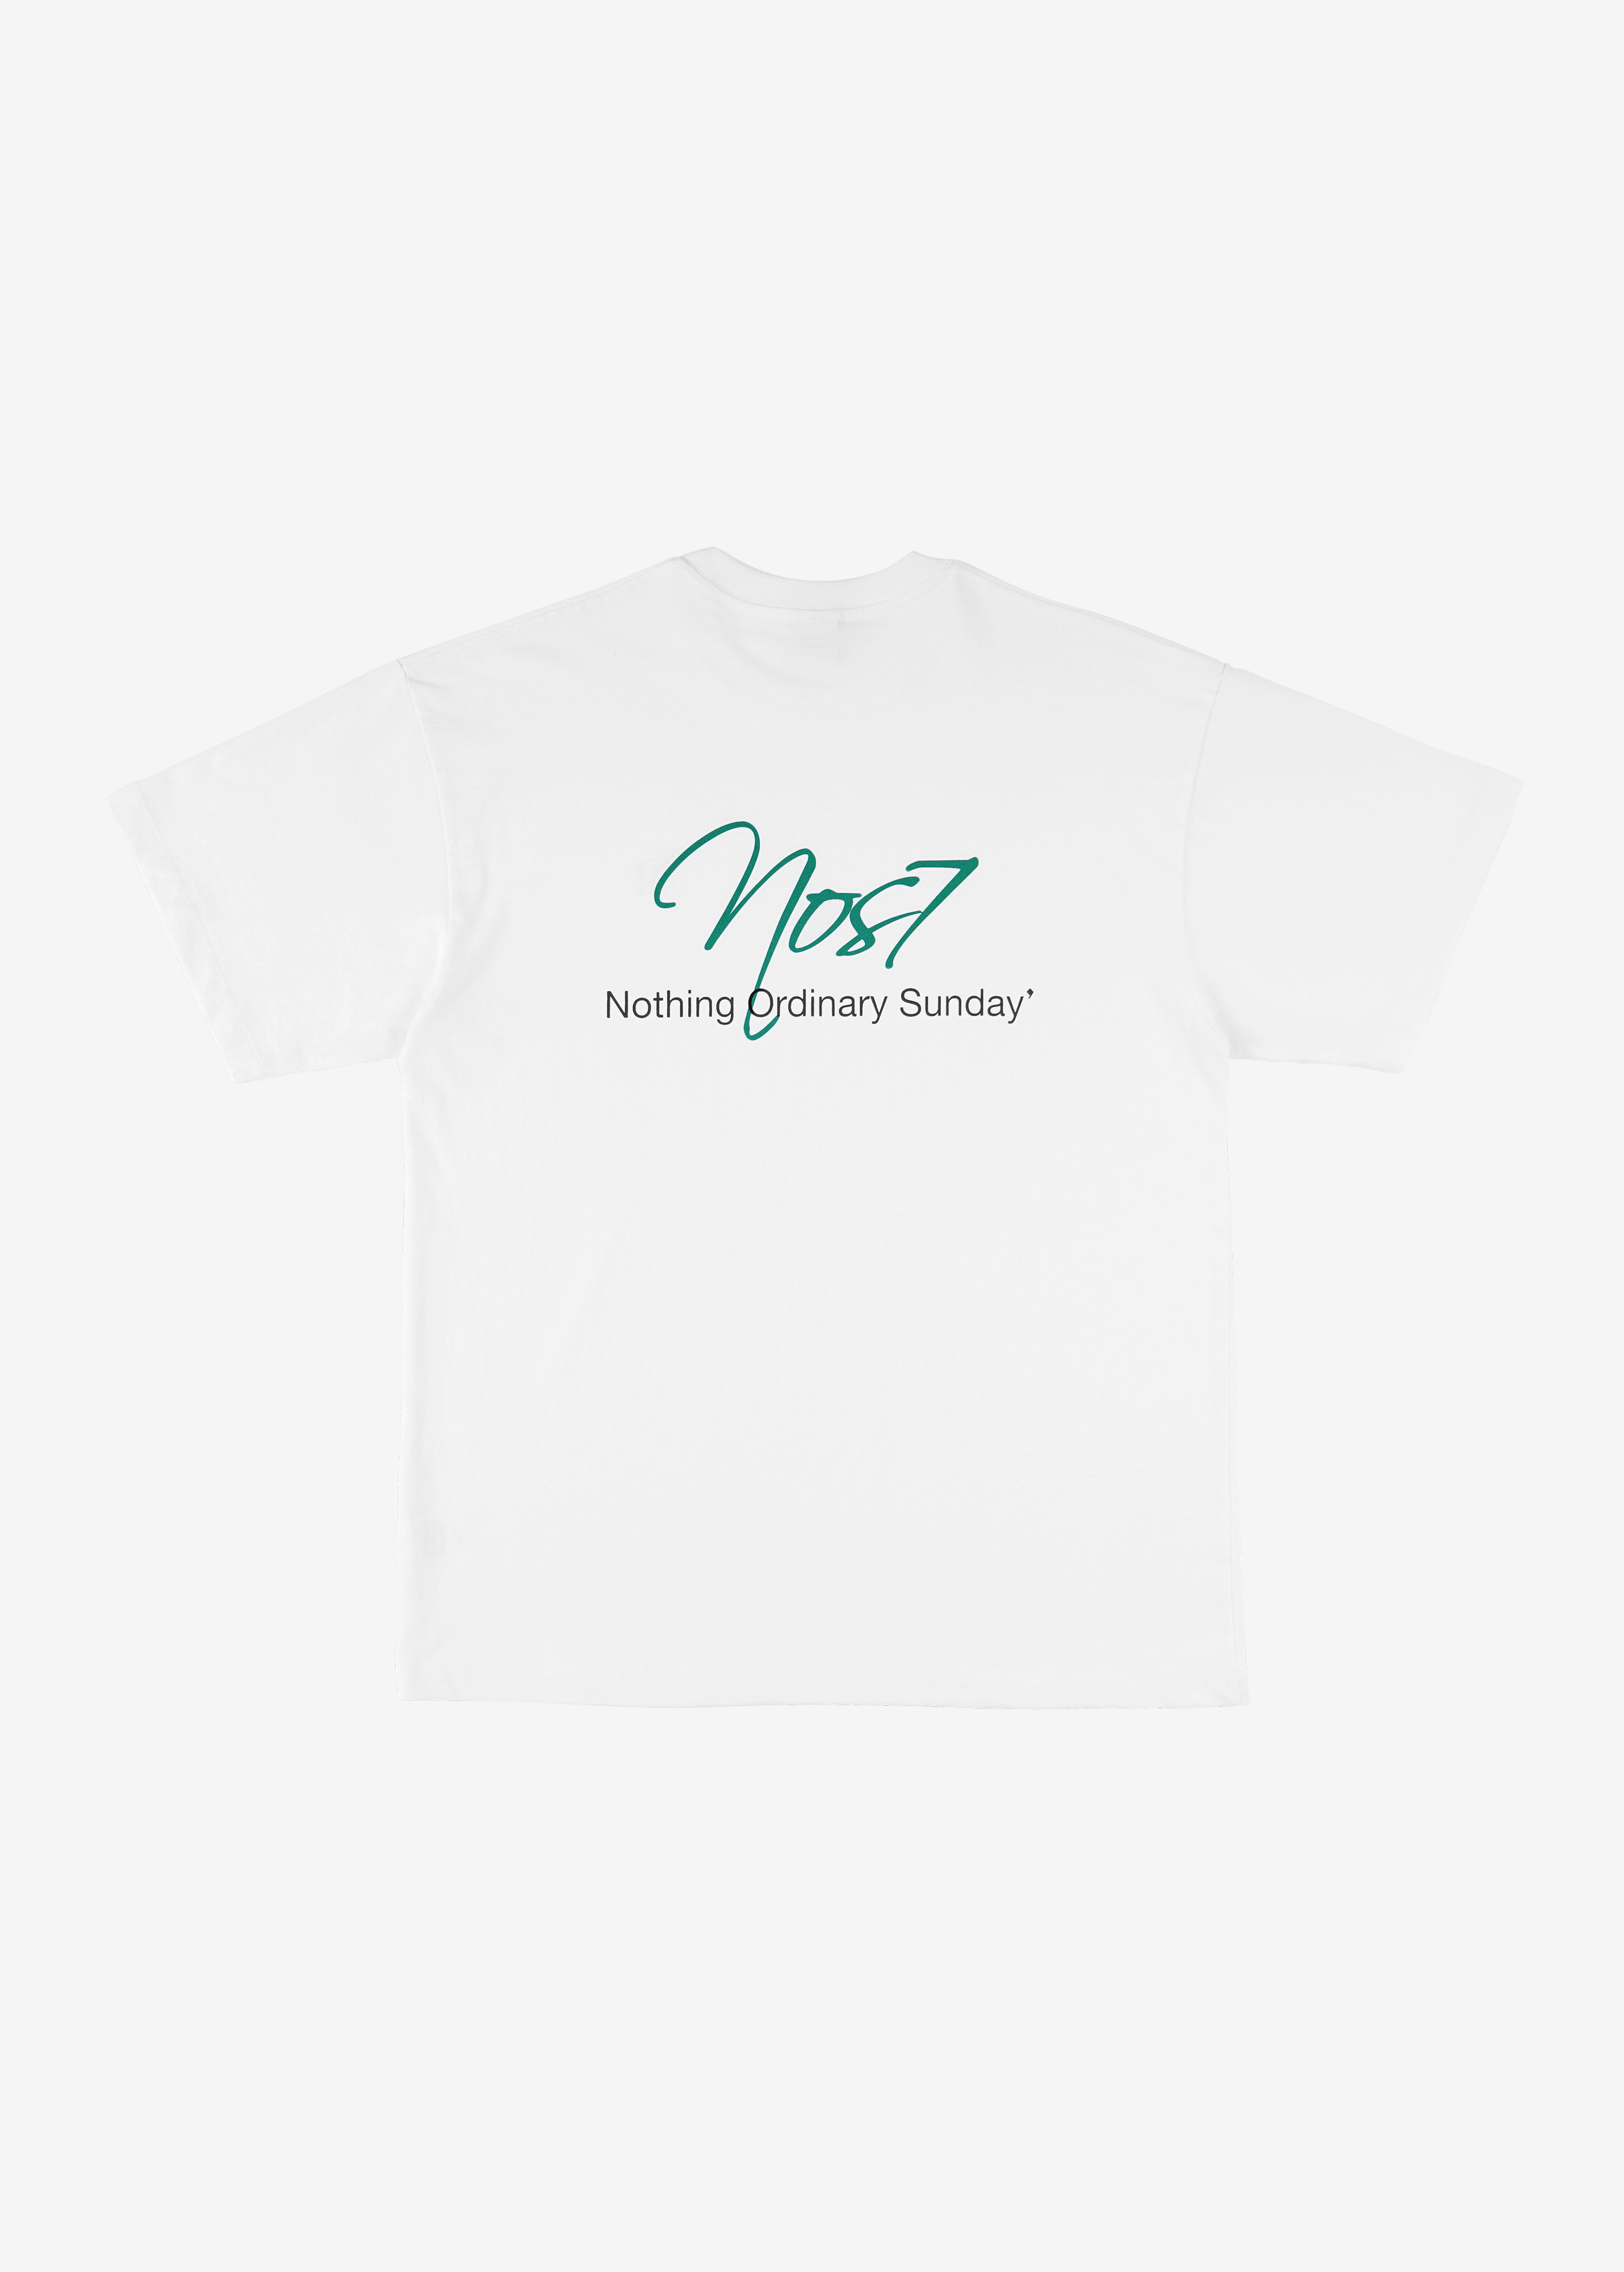 NOS7 Handwriting T-Shirt - White/Green